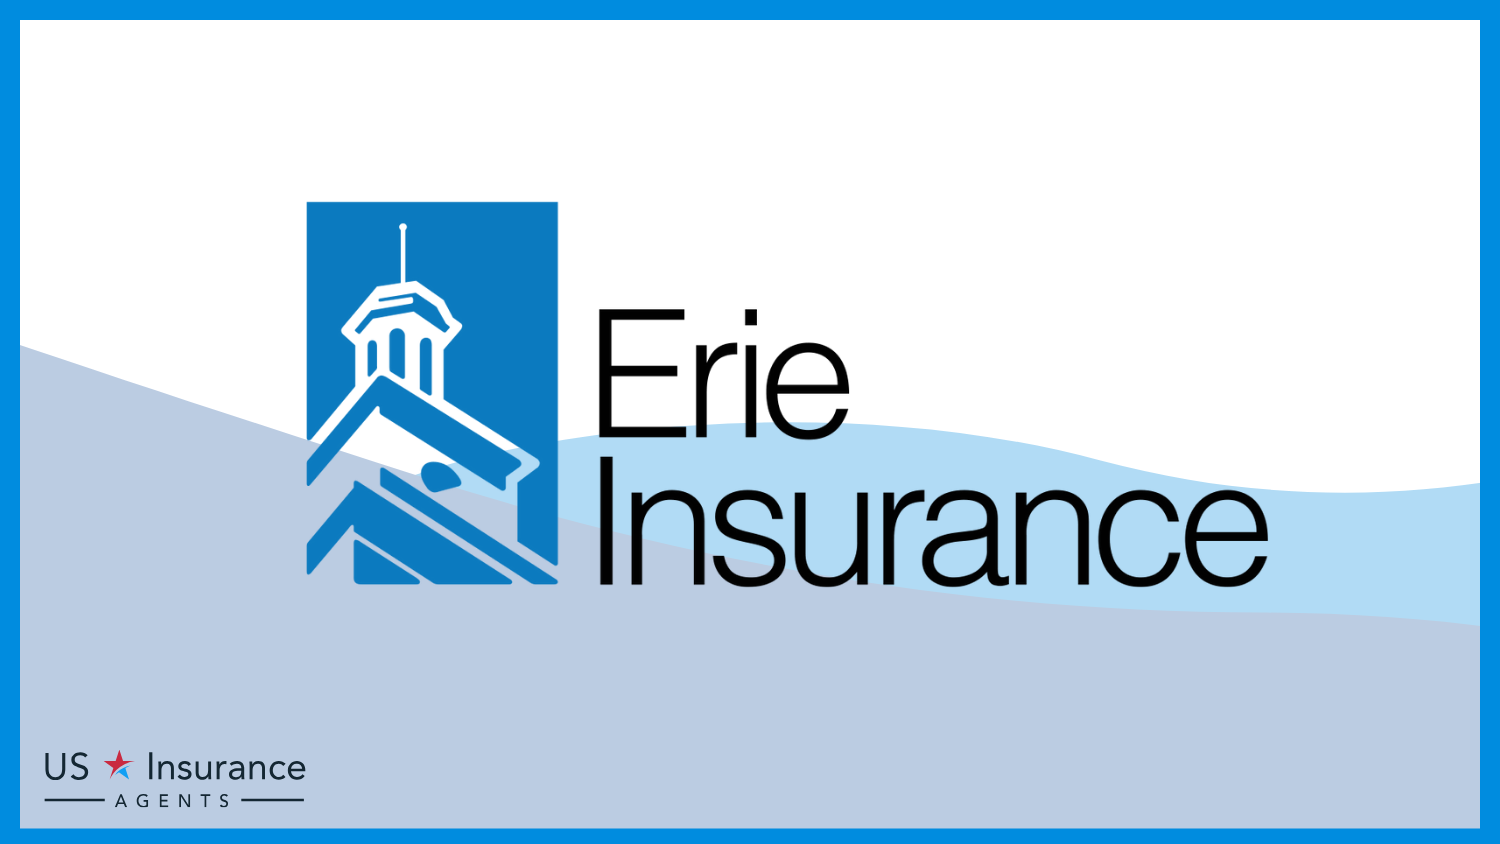 Best Car Insurance for Fleet Managers: Erie